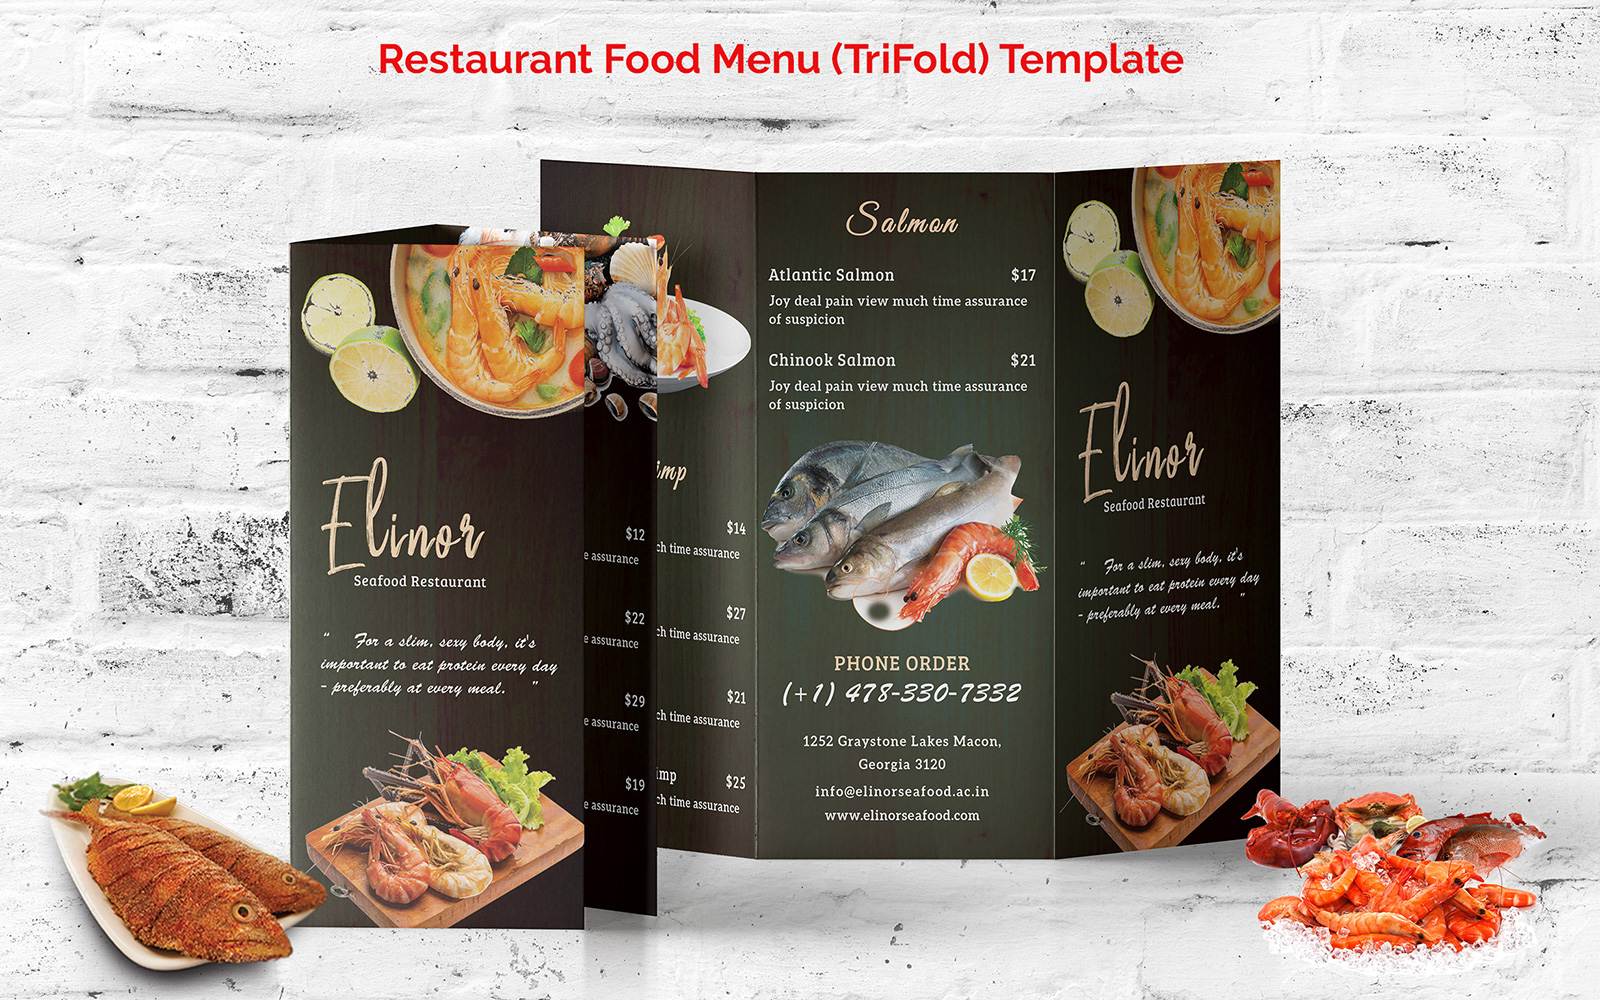 Restaurant Food Menu Trifold - Corporate Identity Template